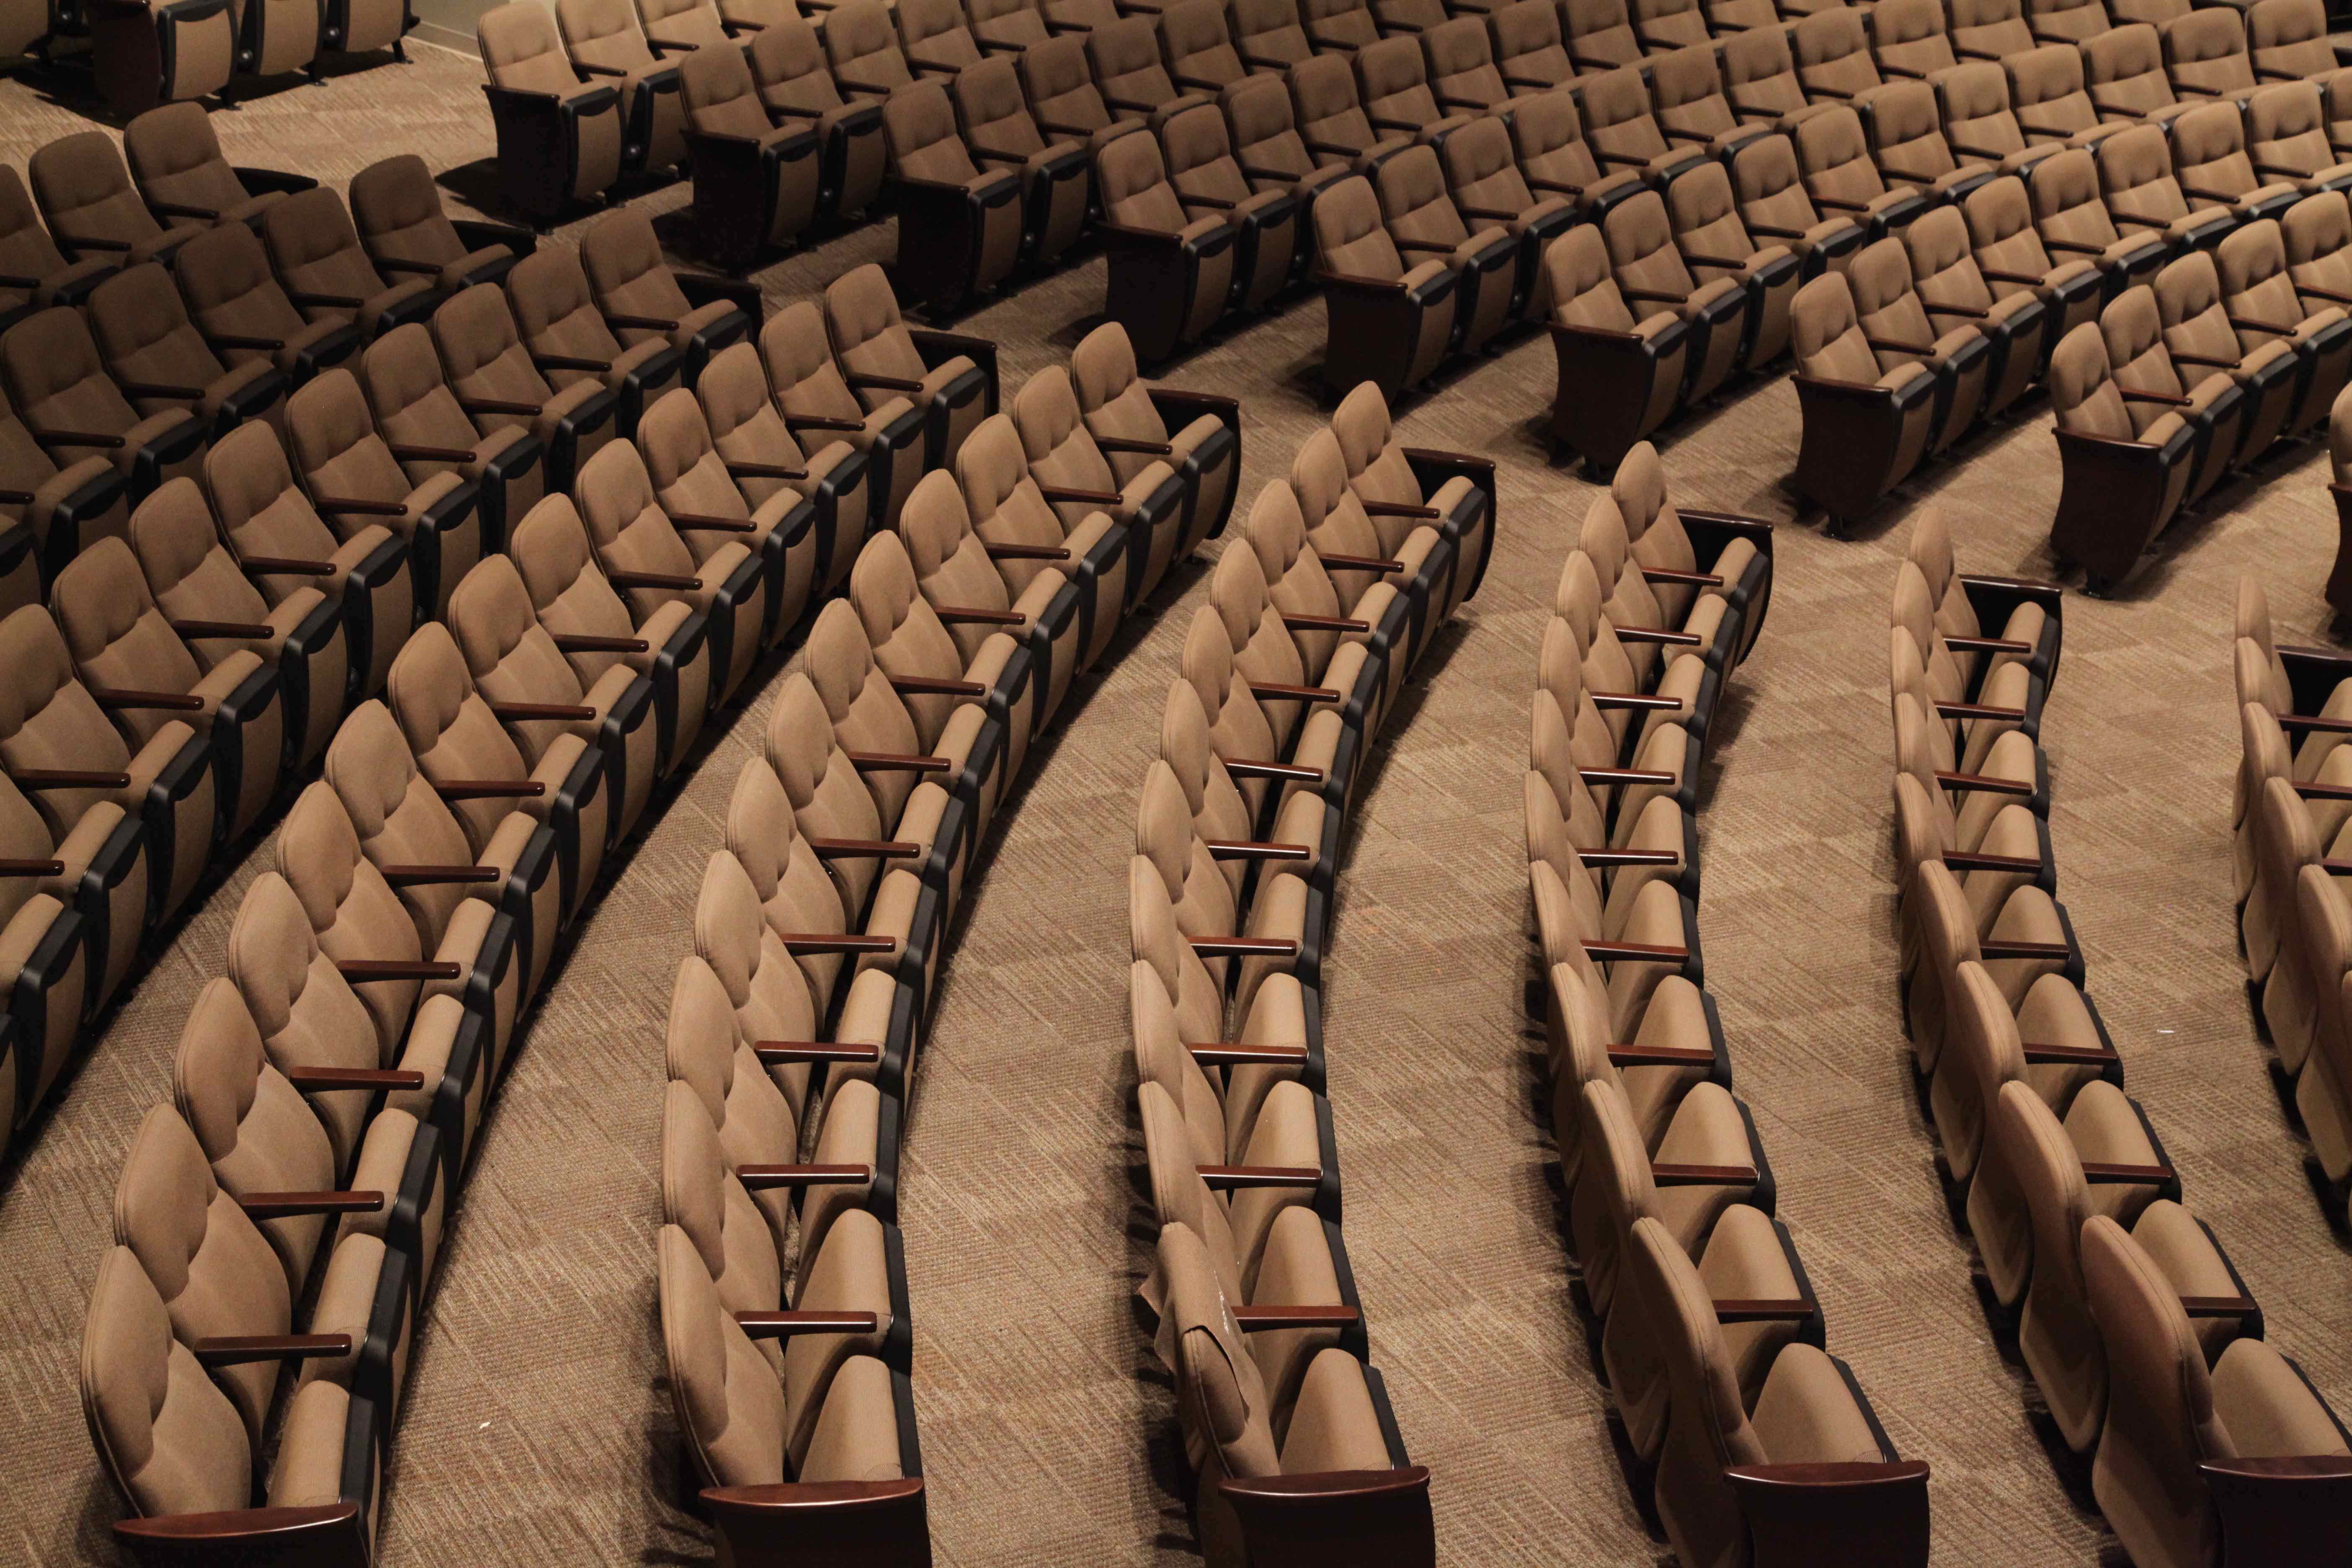 Sanctuary Theater Seating, Theatre Seats - Church Interiors, Inc.